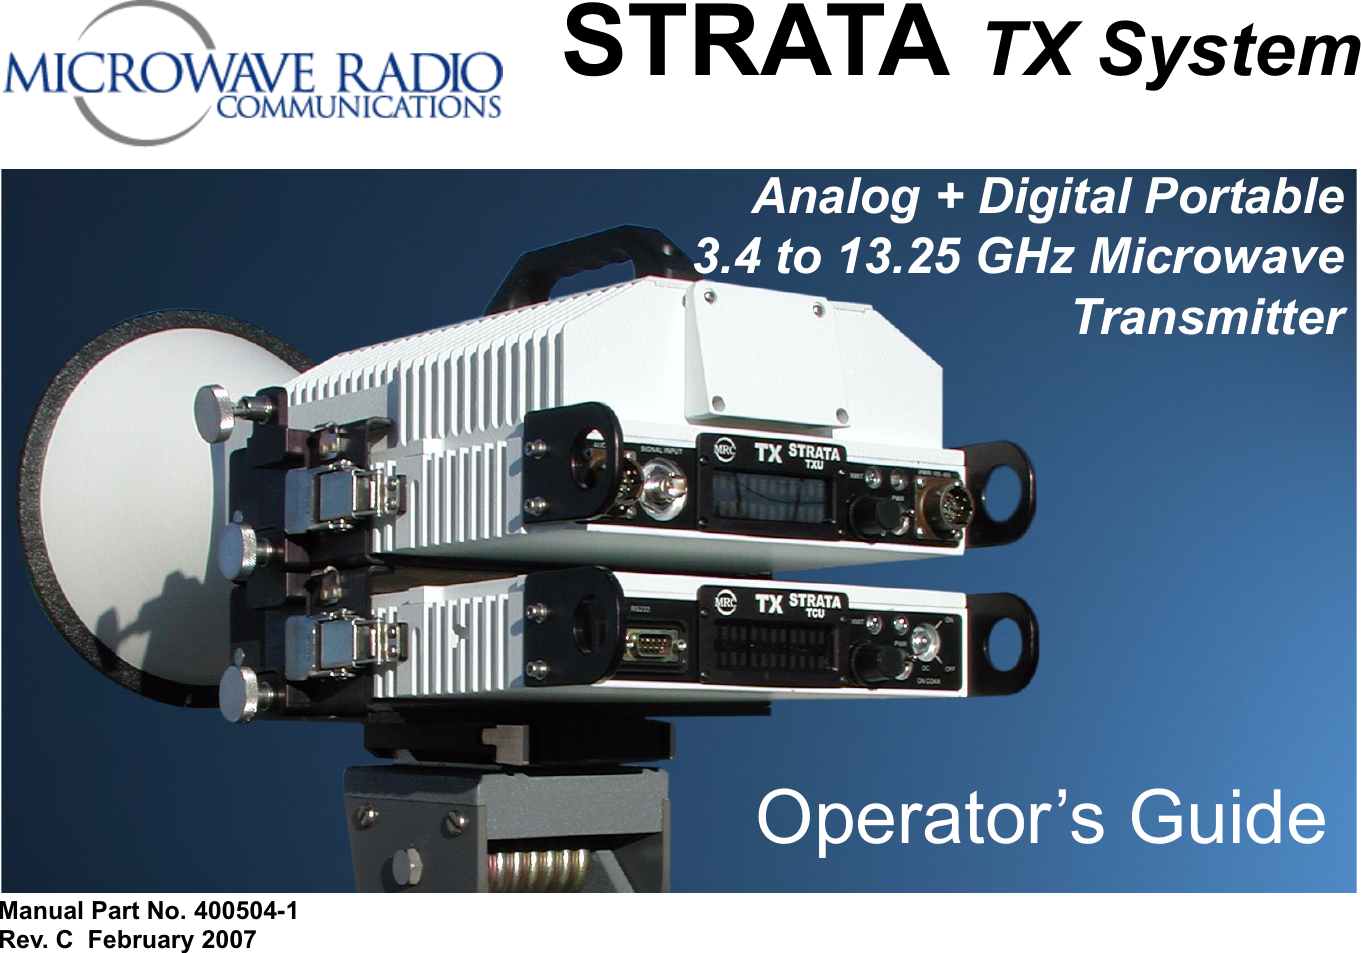 STRATA TX SystemOperator’s GuideAnalog + Digital Portable3.4 to 13.25 GHz MicrowaveTransmitterManual Part No. 400504-1 Rev. C  February 2007